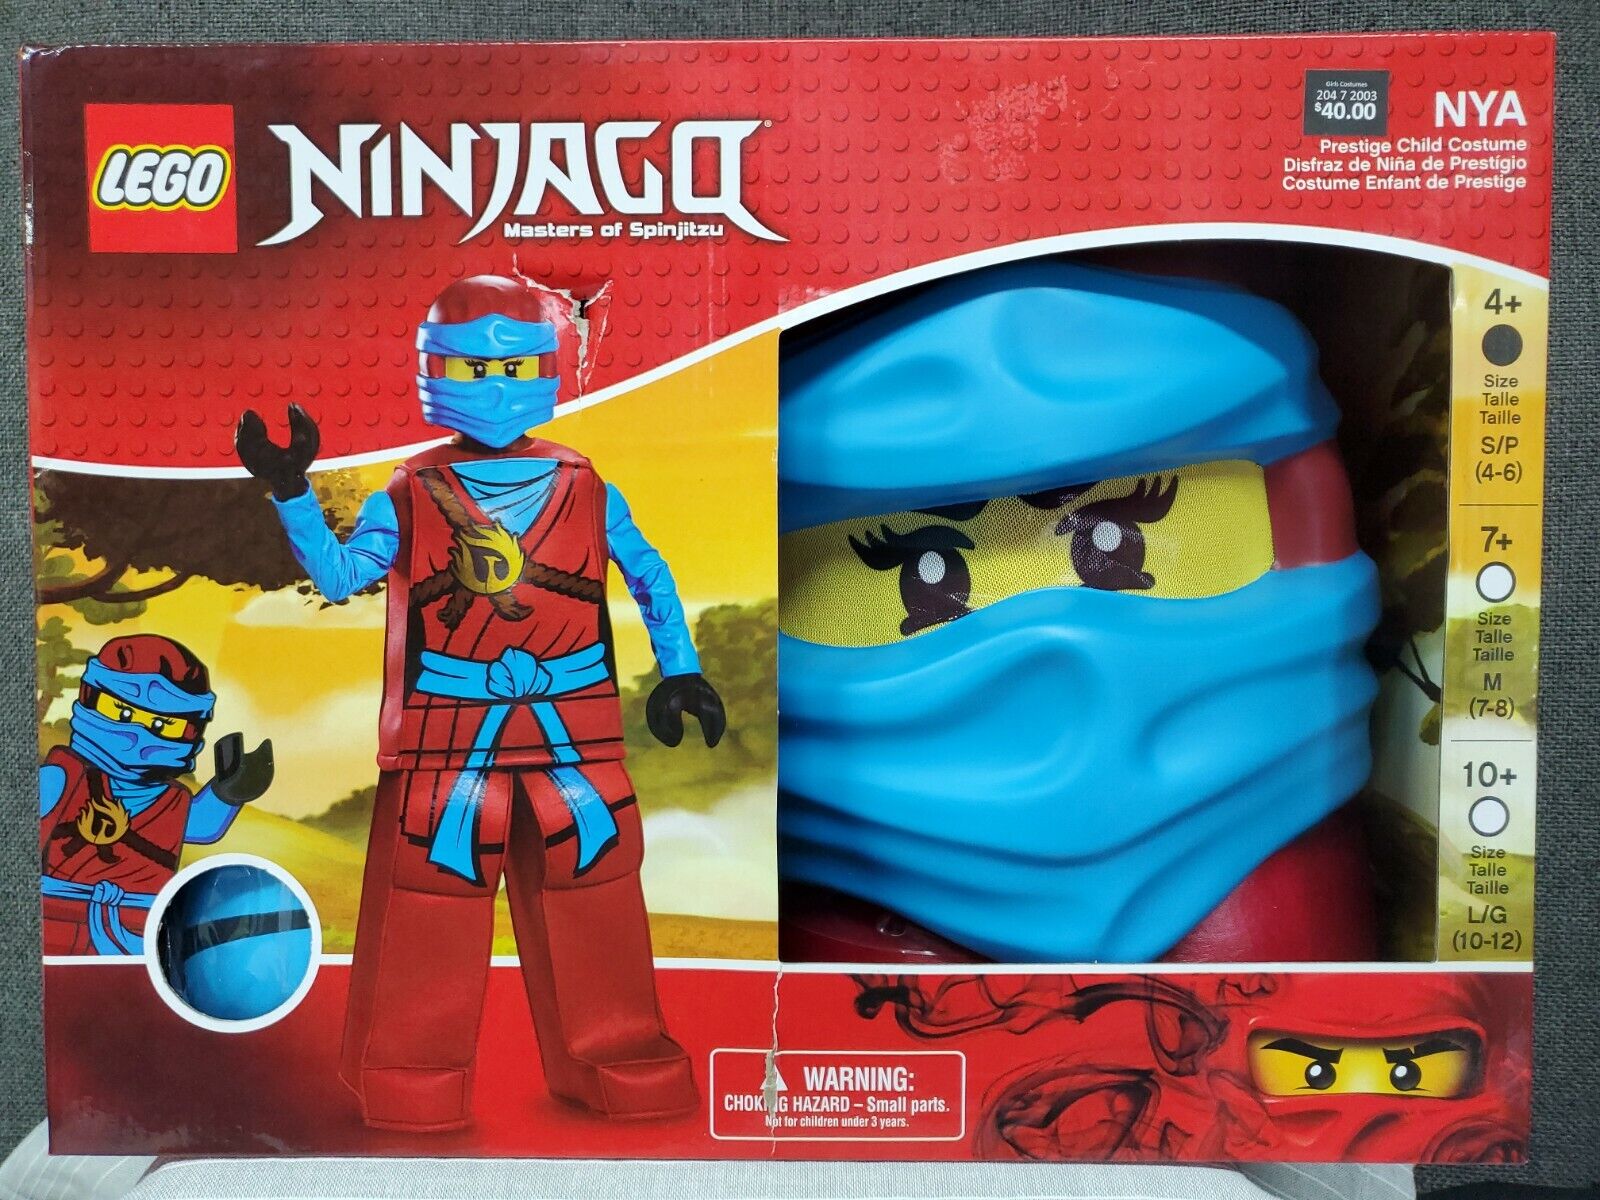 Bewust worden Stof rijk LEGO Ninjago NYA Prestige Costume~ Size Small (4-6)~ NEW Sealed Box! - BND  Treasure Chest